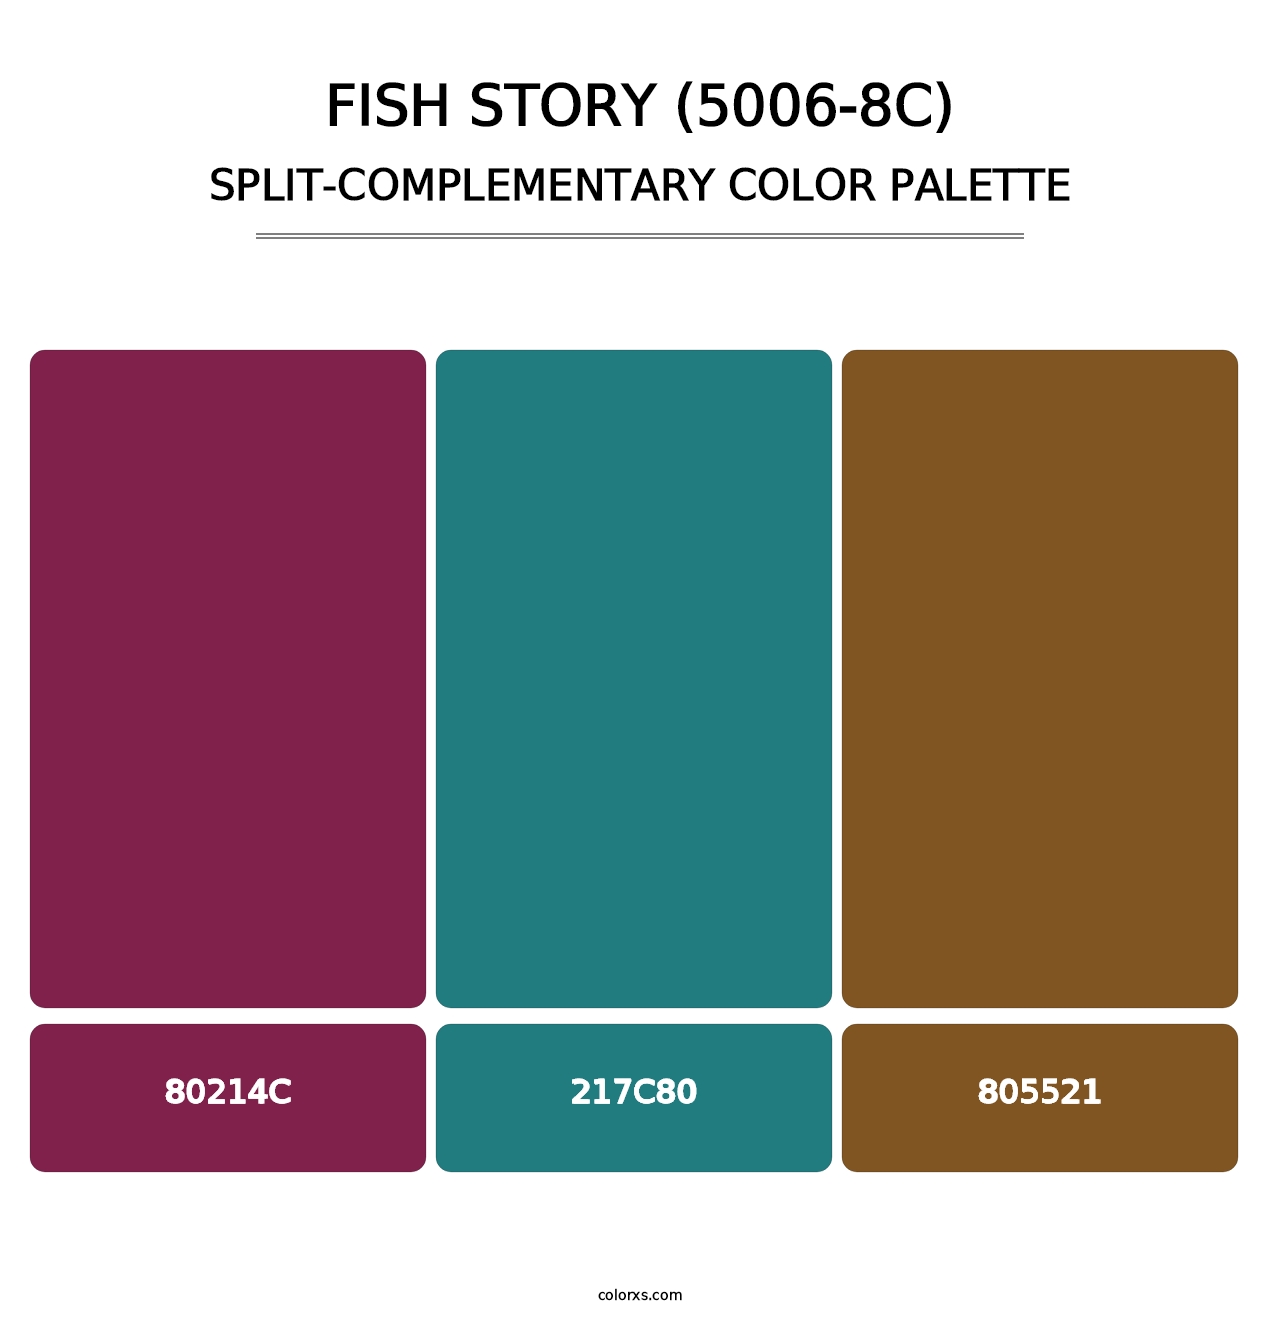 Fish Story (5006-8C) - Split-Complementary Color Palette